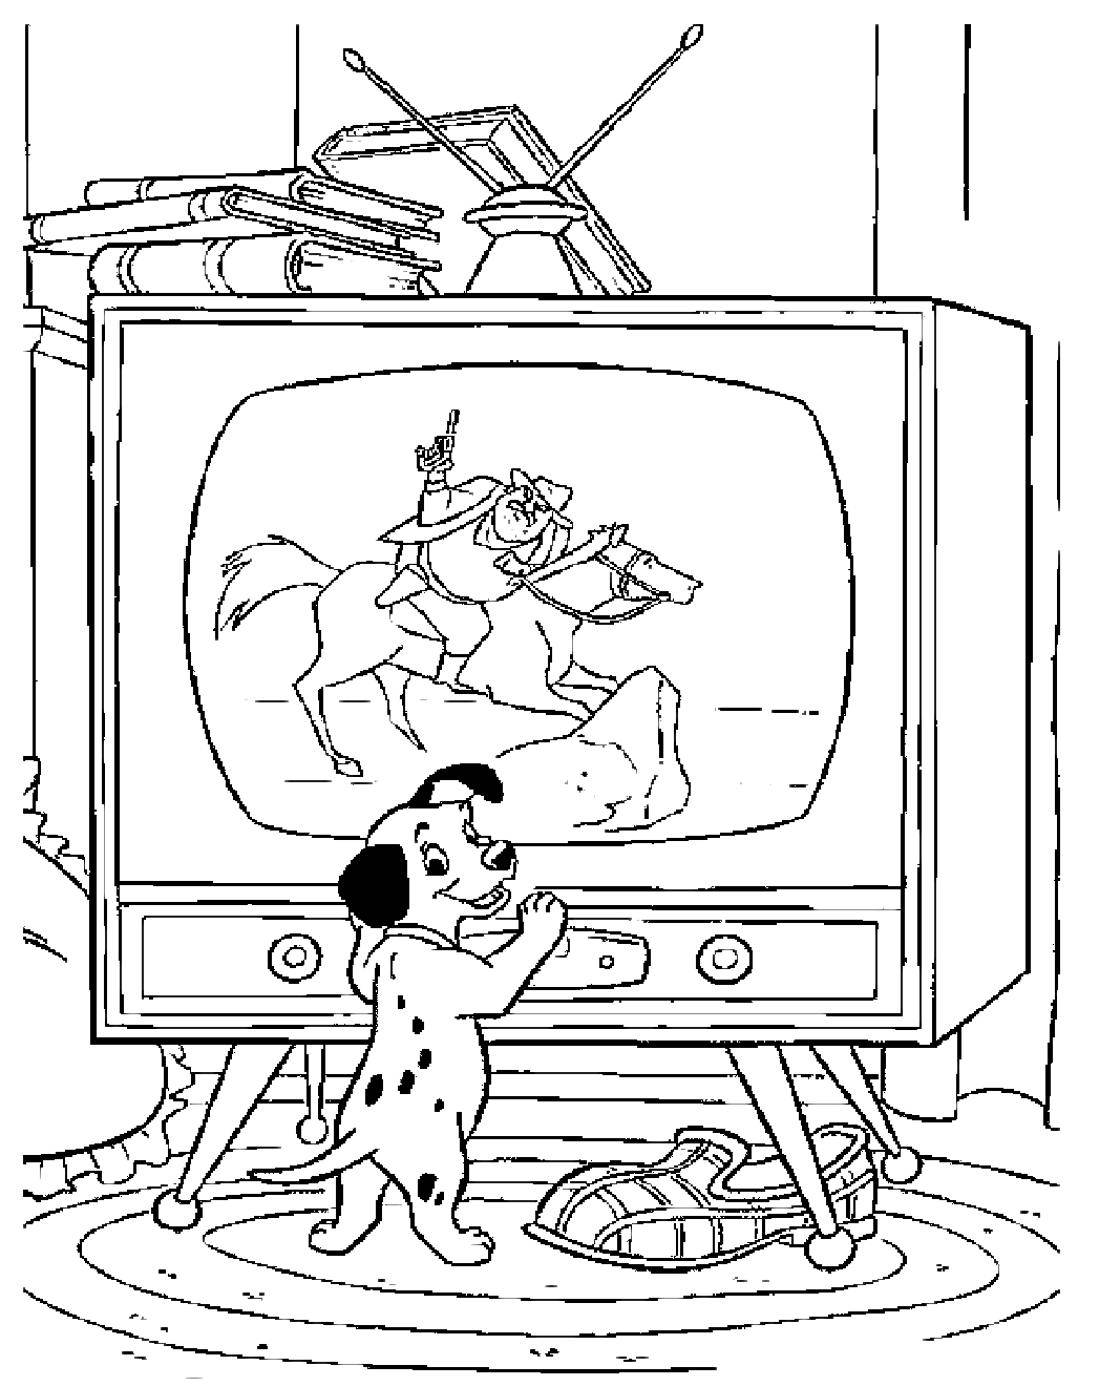 Название: Раскраска Далматинец смотрит вестерн. Категория: телевизор. Теги: Техника.